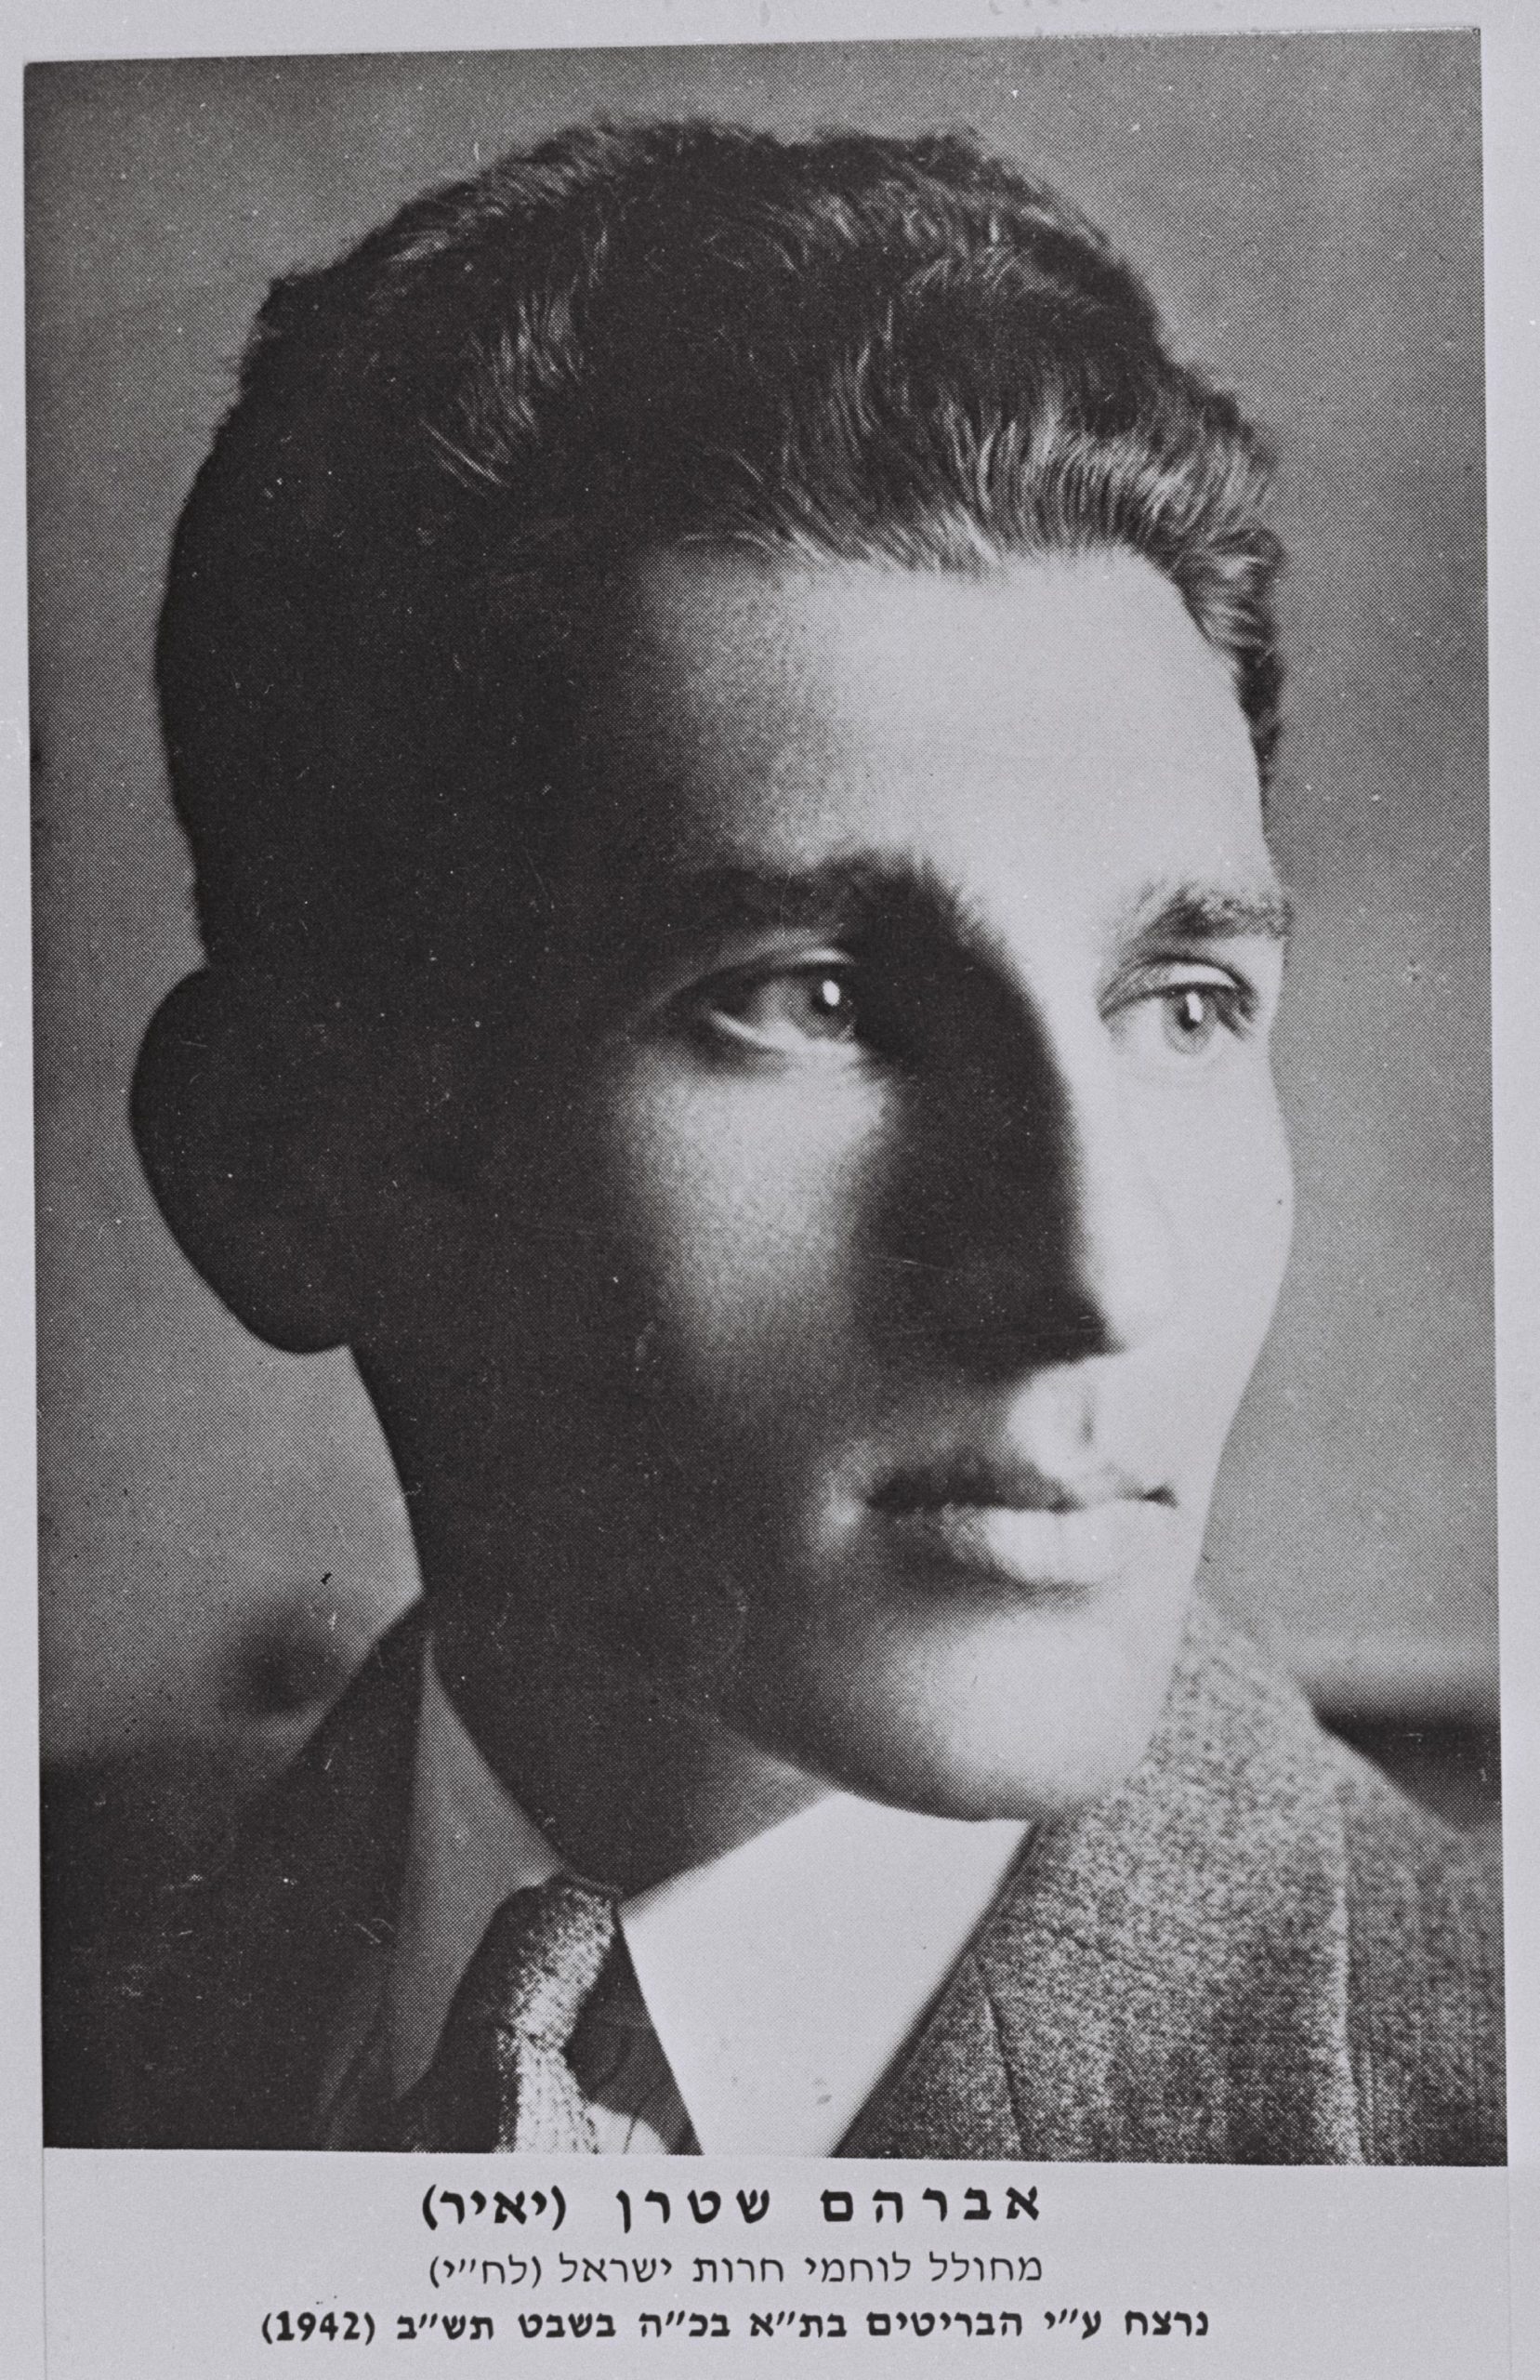 Avraham Stern, 1907-1942